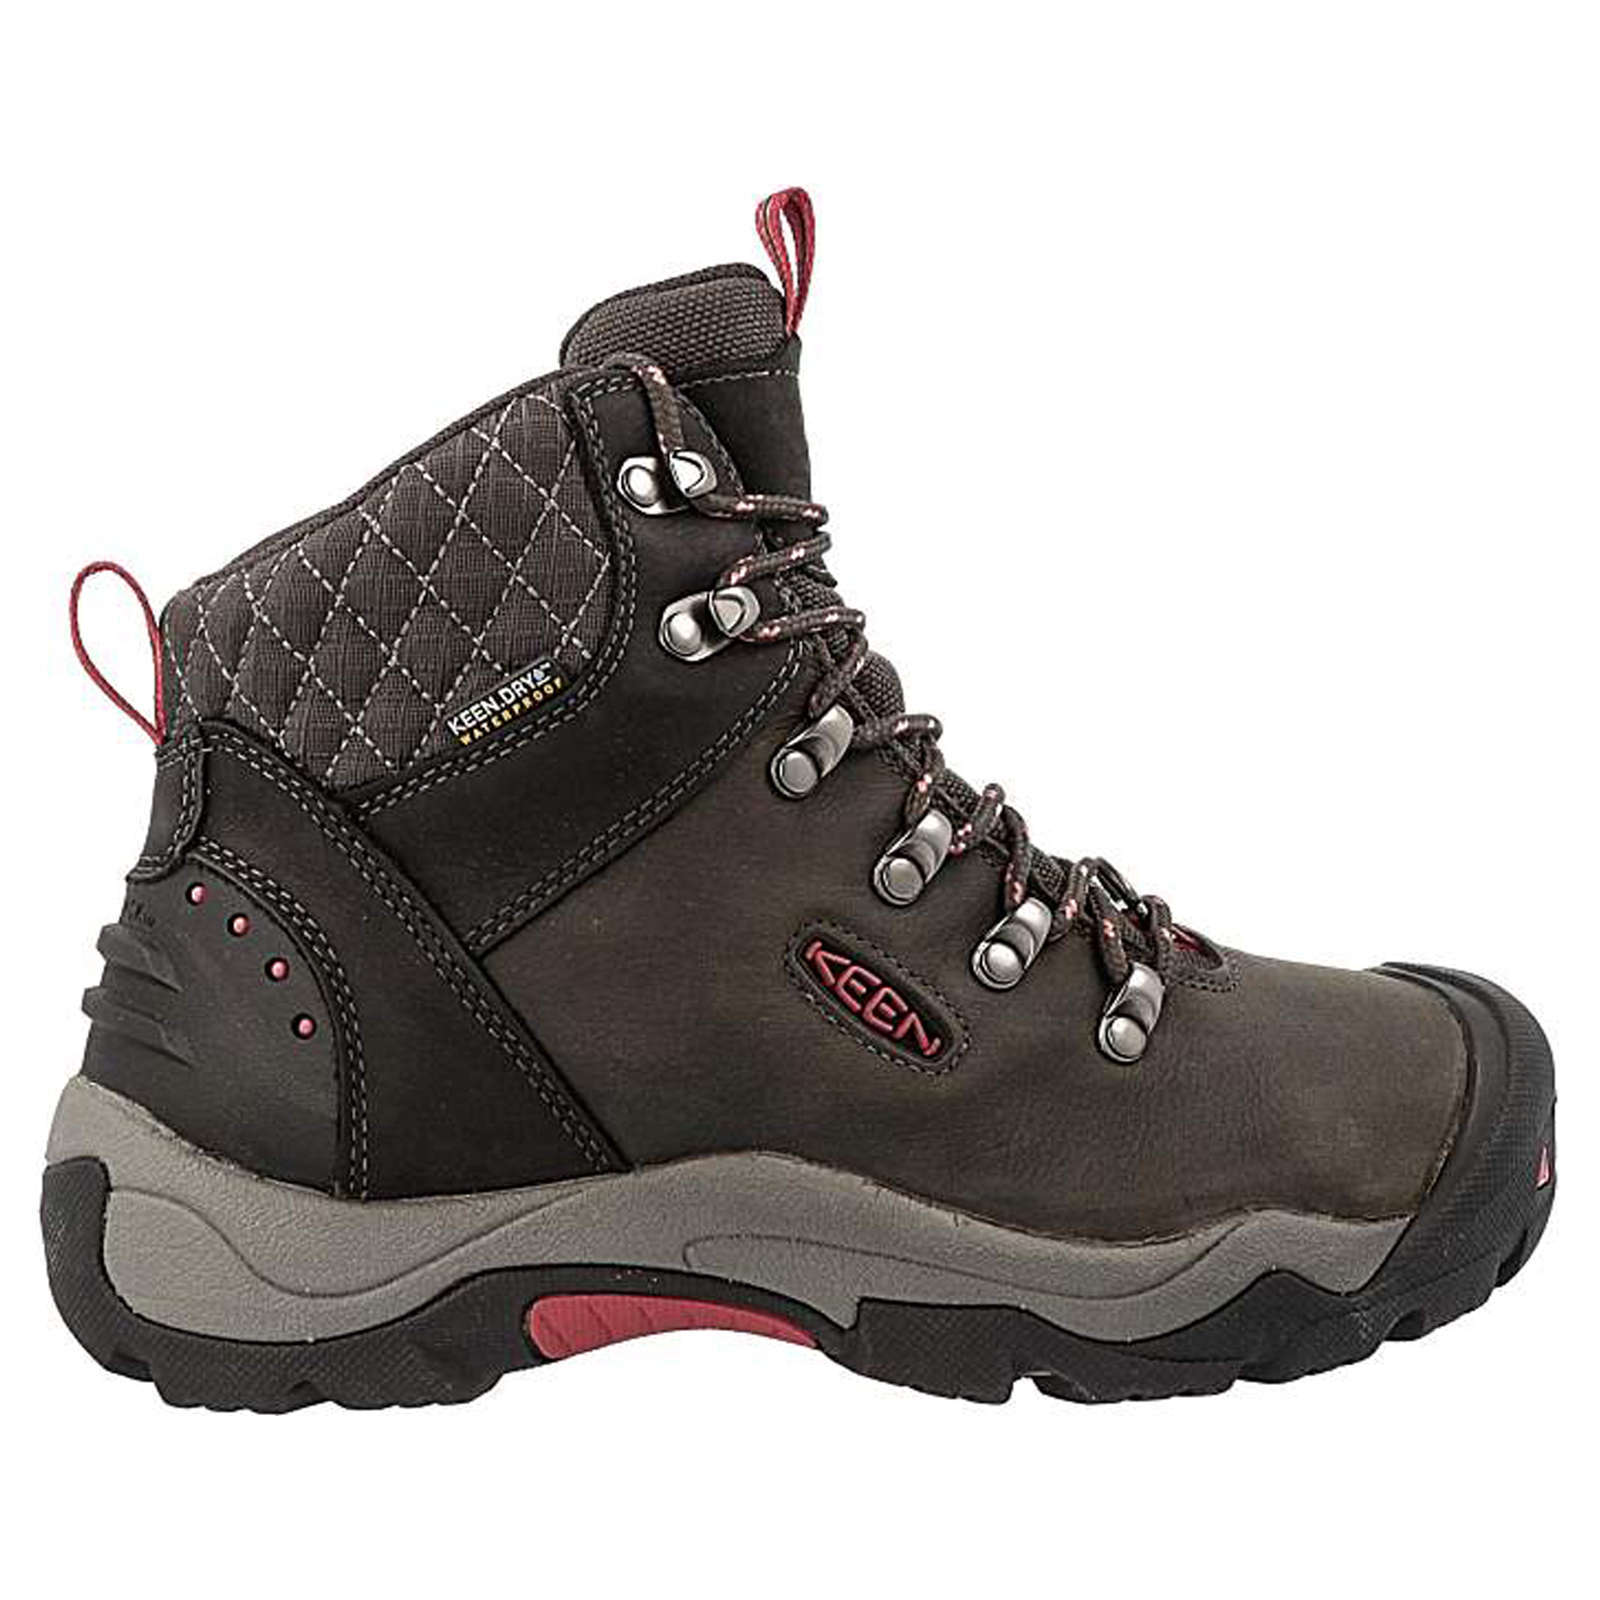 Keen Revel III Waterproof Leather Women's Winter Hiking Boots#color_black rose